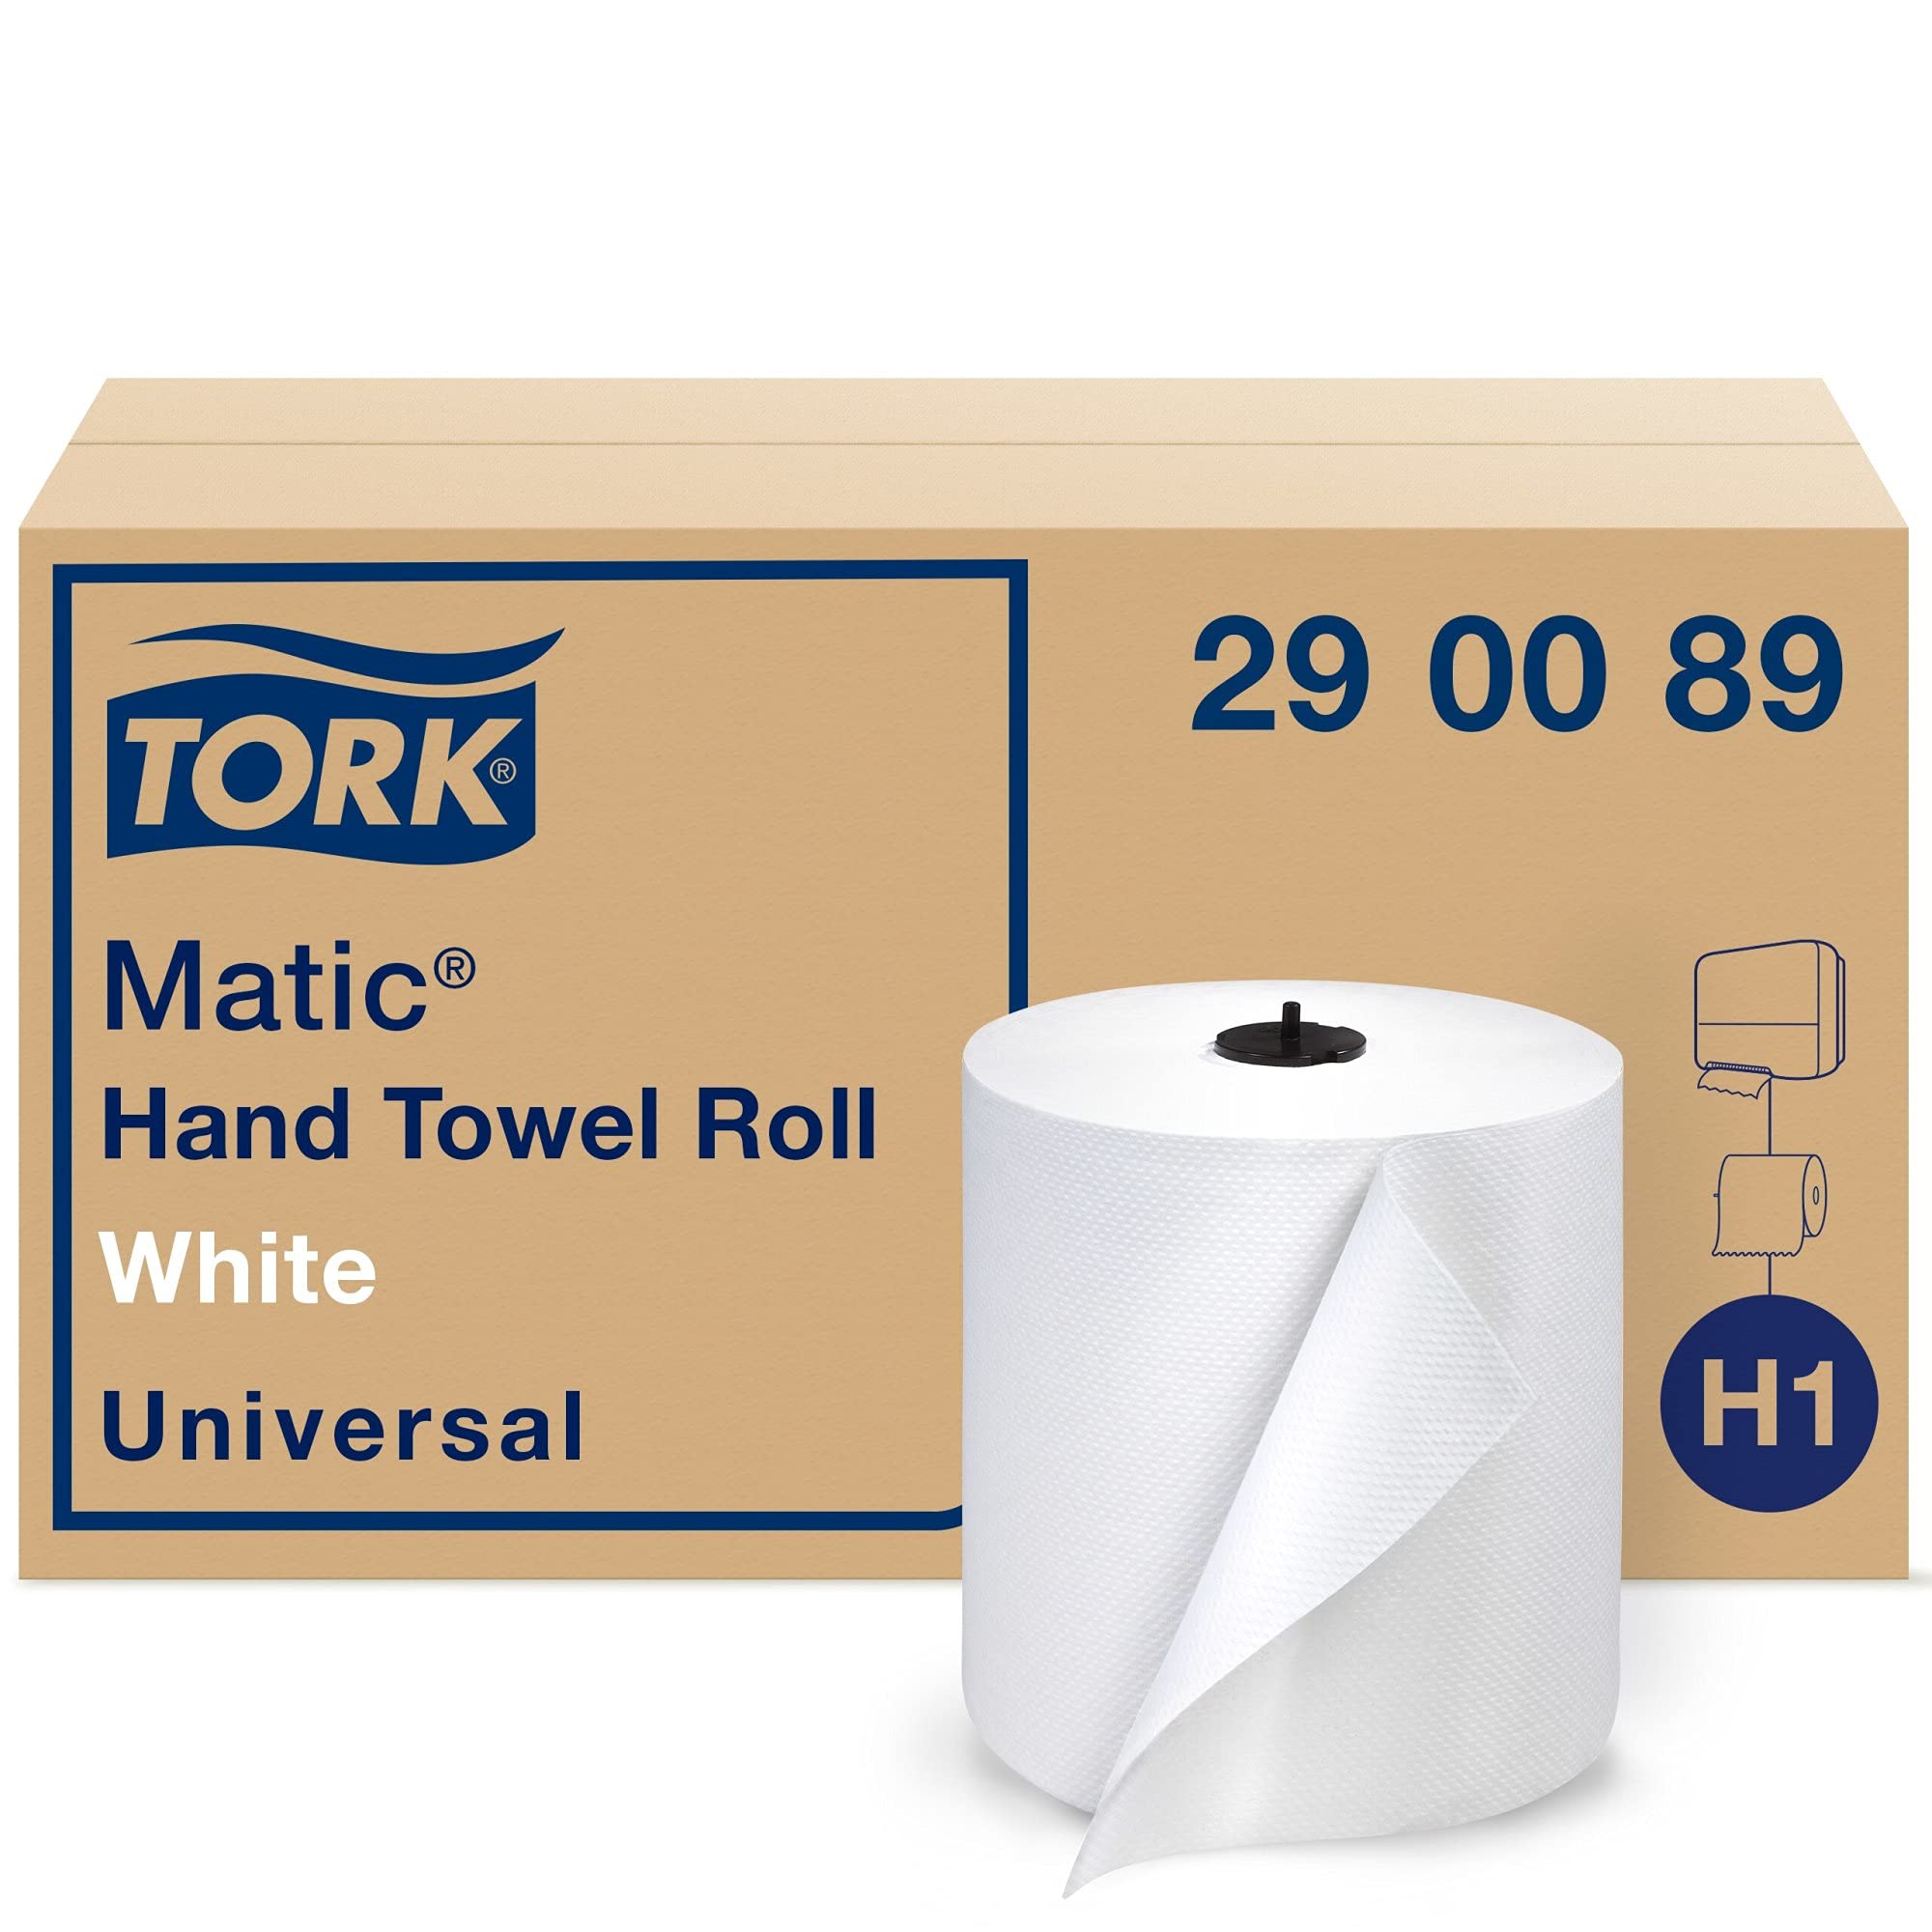 Tork Matic Paper ハンドタオルロール ホワイト H1、ユニバーサル、100% 再生繊維、6 ロール x 700 フィート、290089